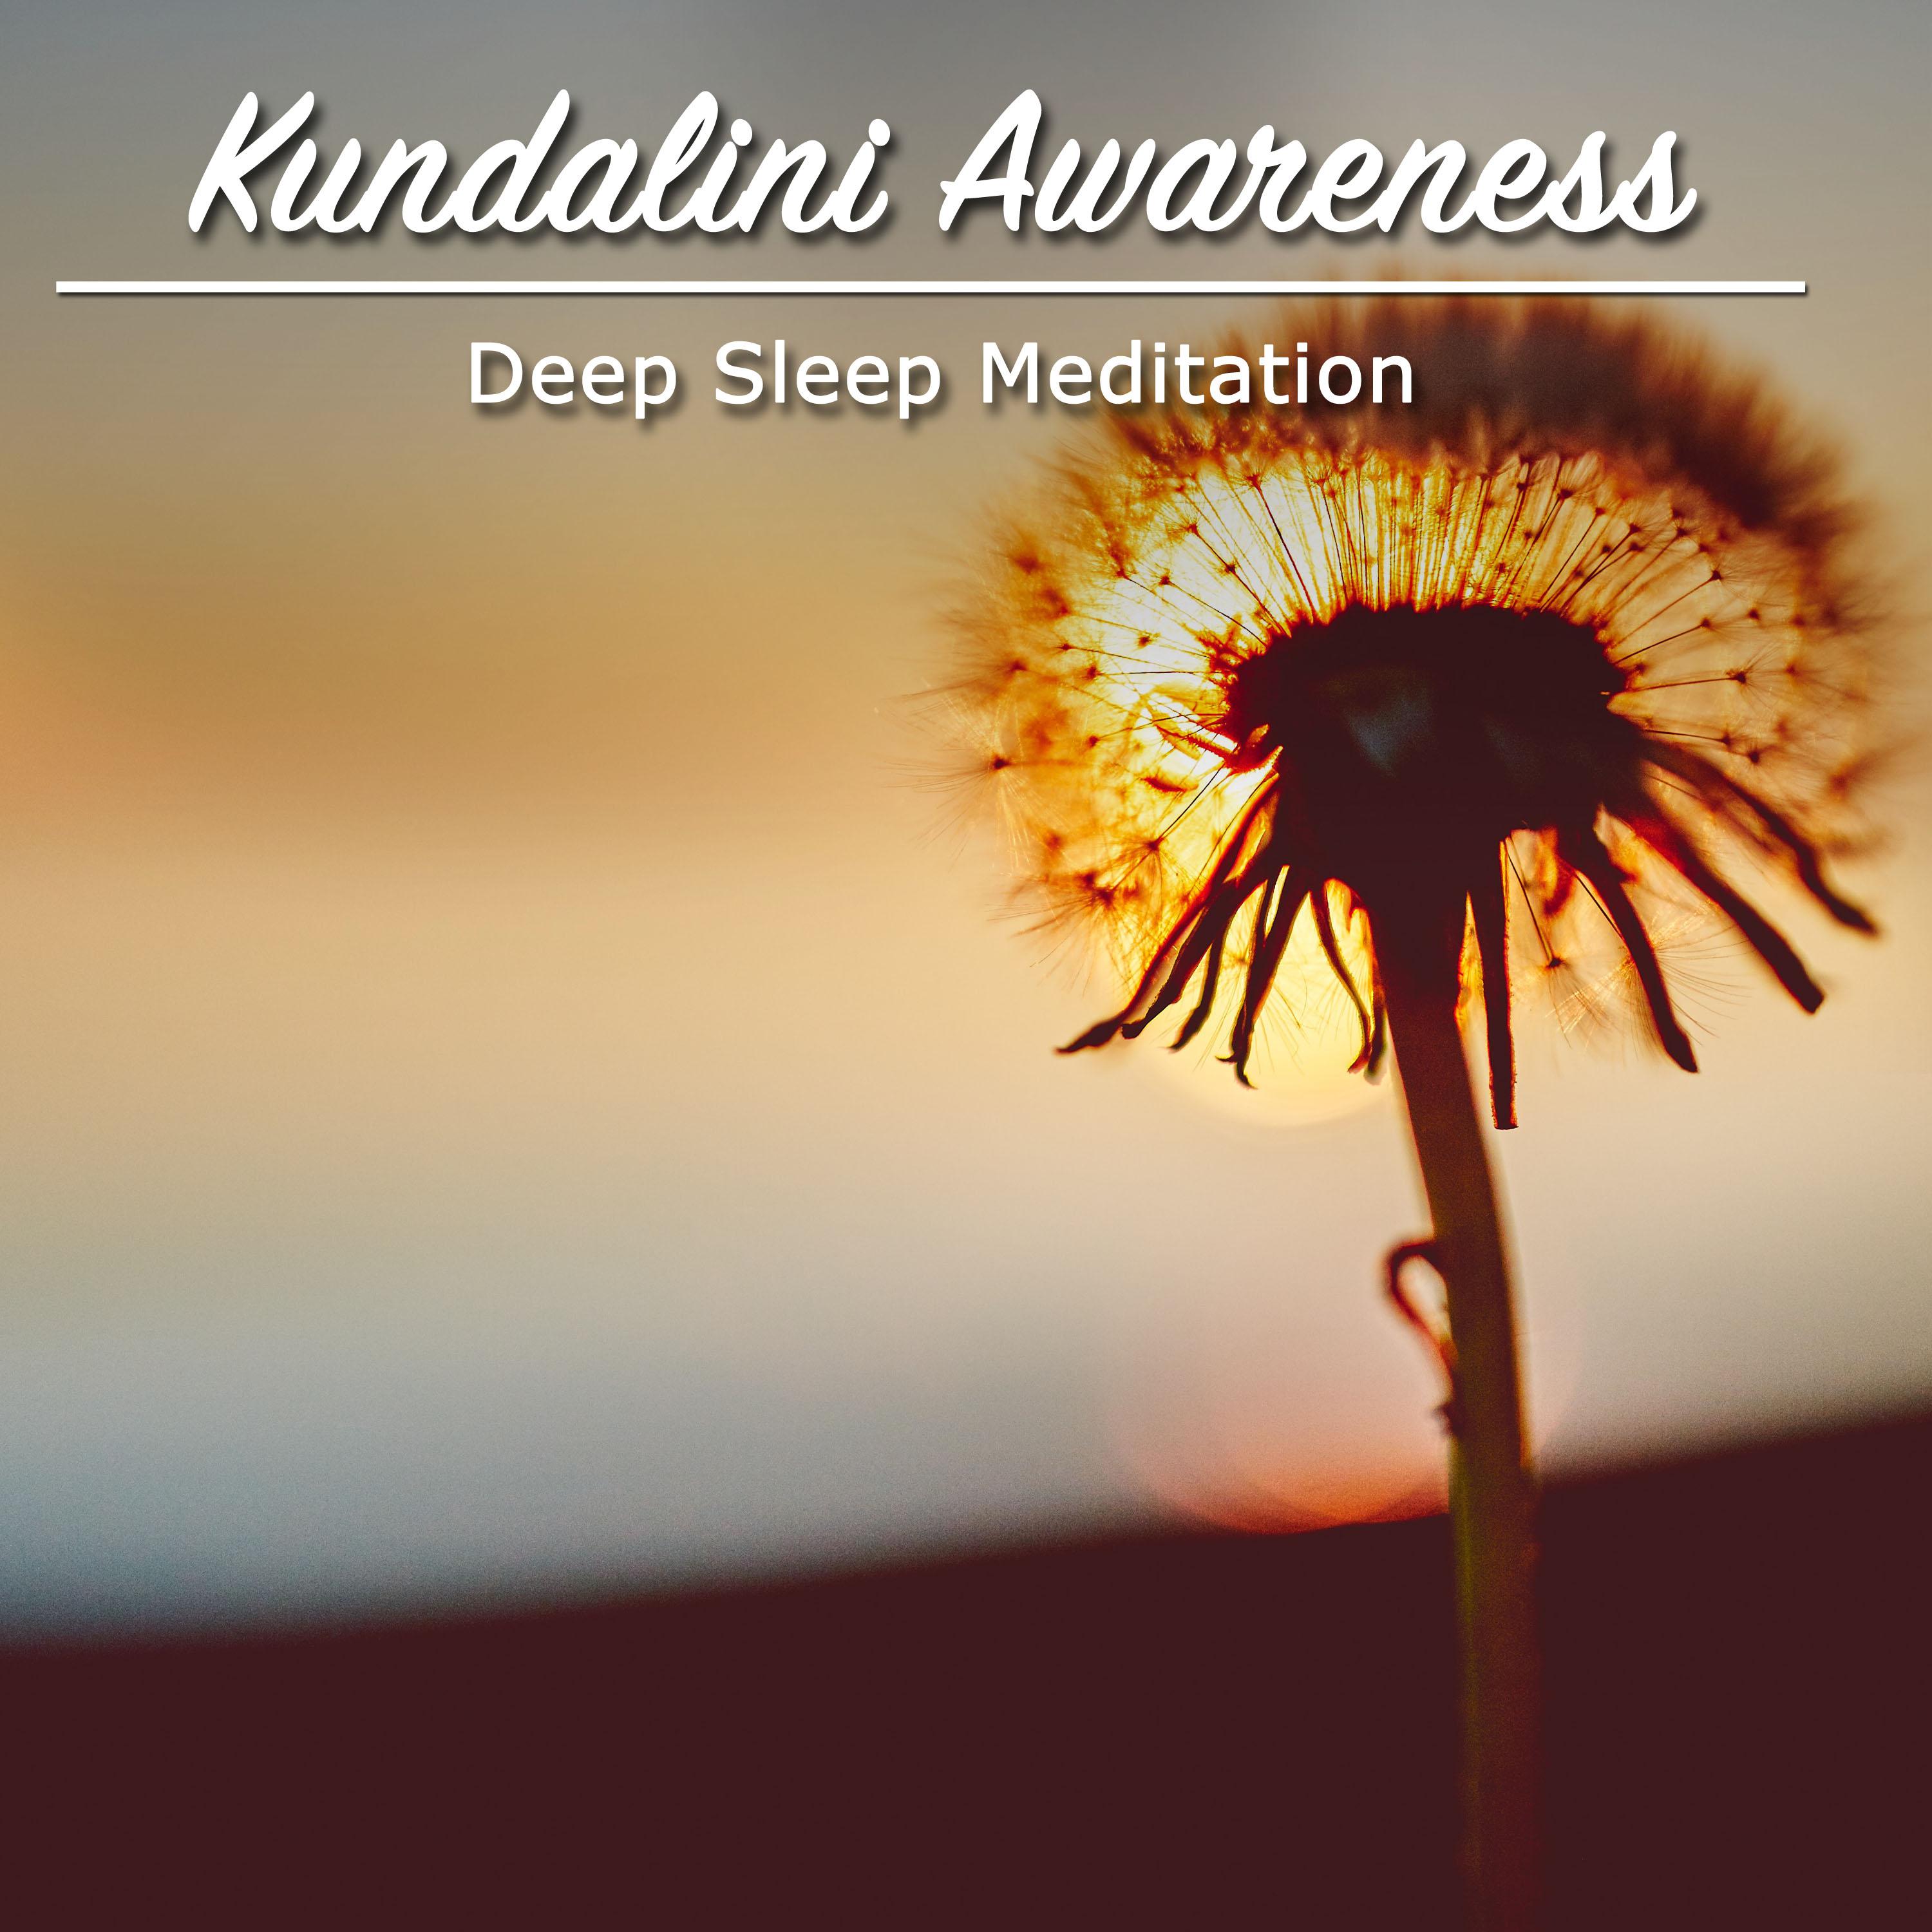 13 Kundalini Awareness: Deep Sleep Meditation